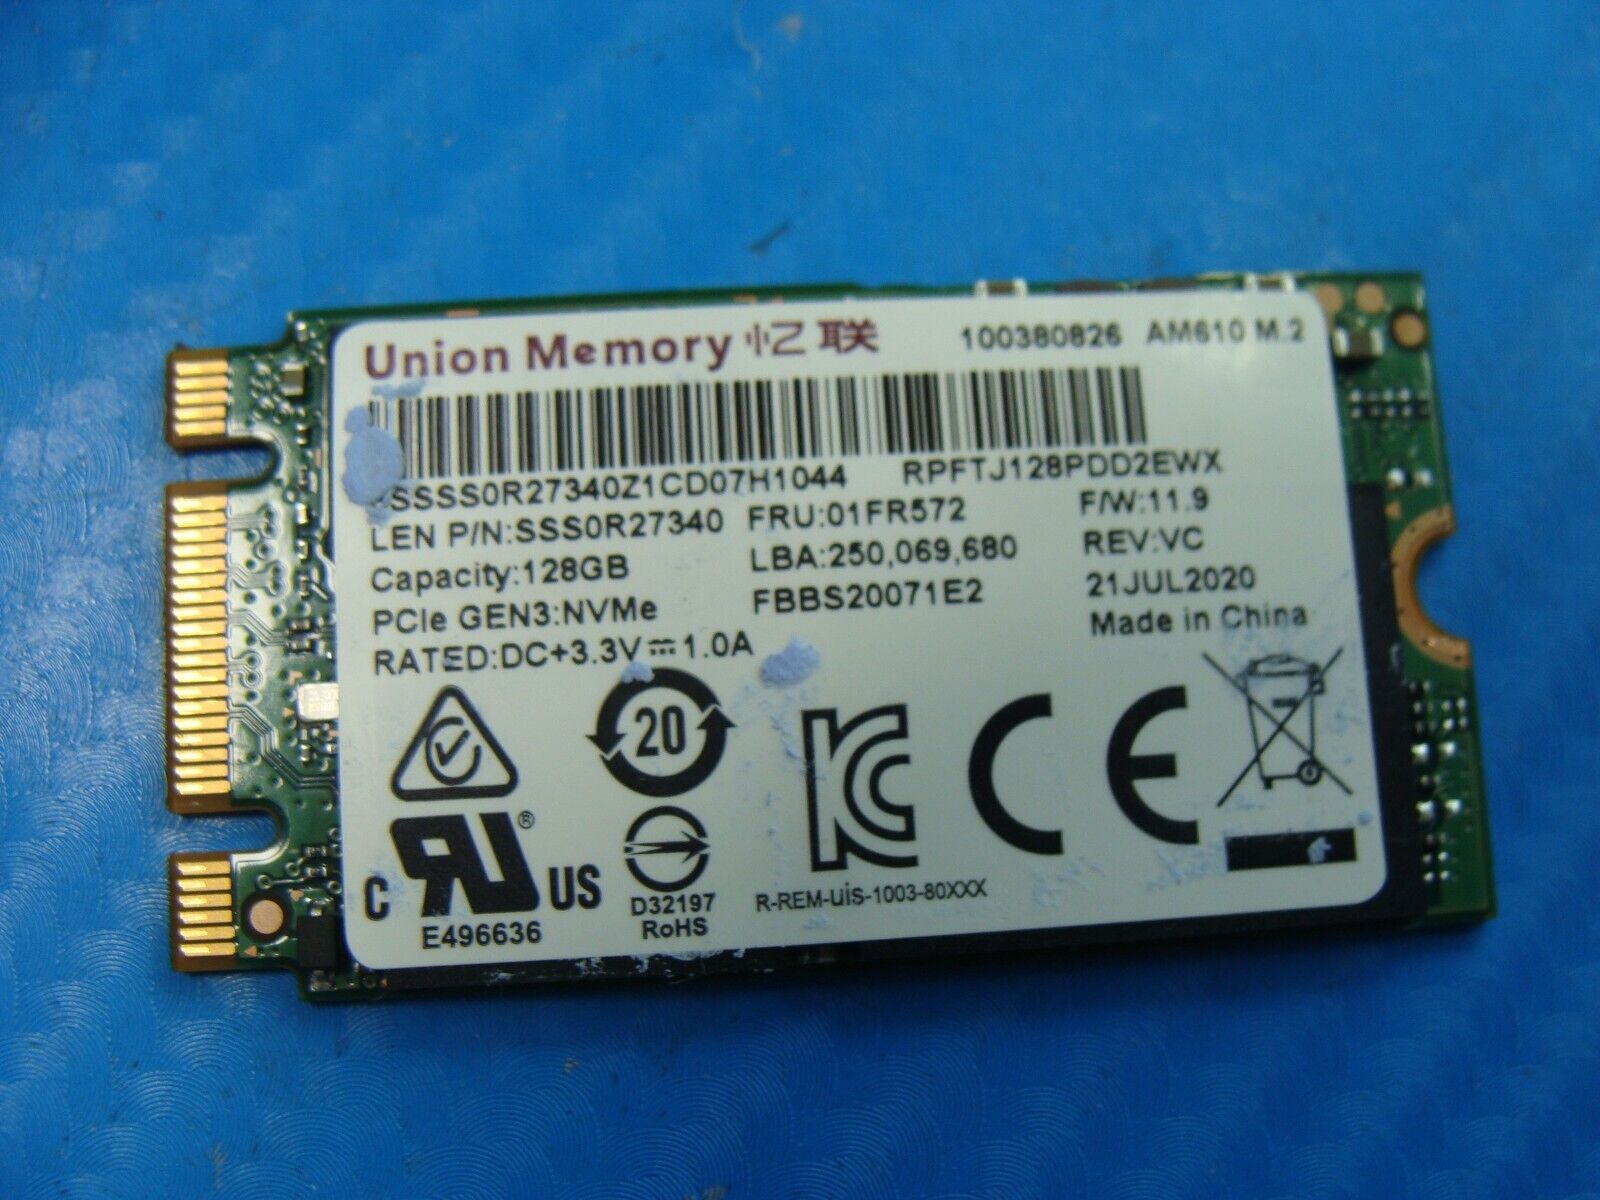 Lenovo 14IML05 Union Memory NVMe M.2 128GB SSD Solid State Drive RPFTJ128PDD2EWX